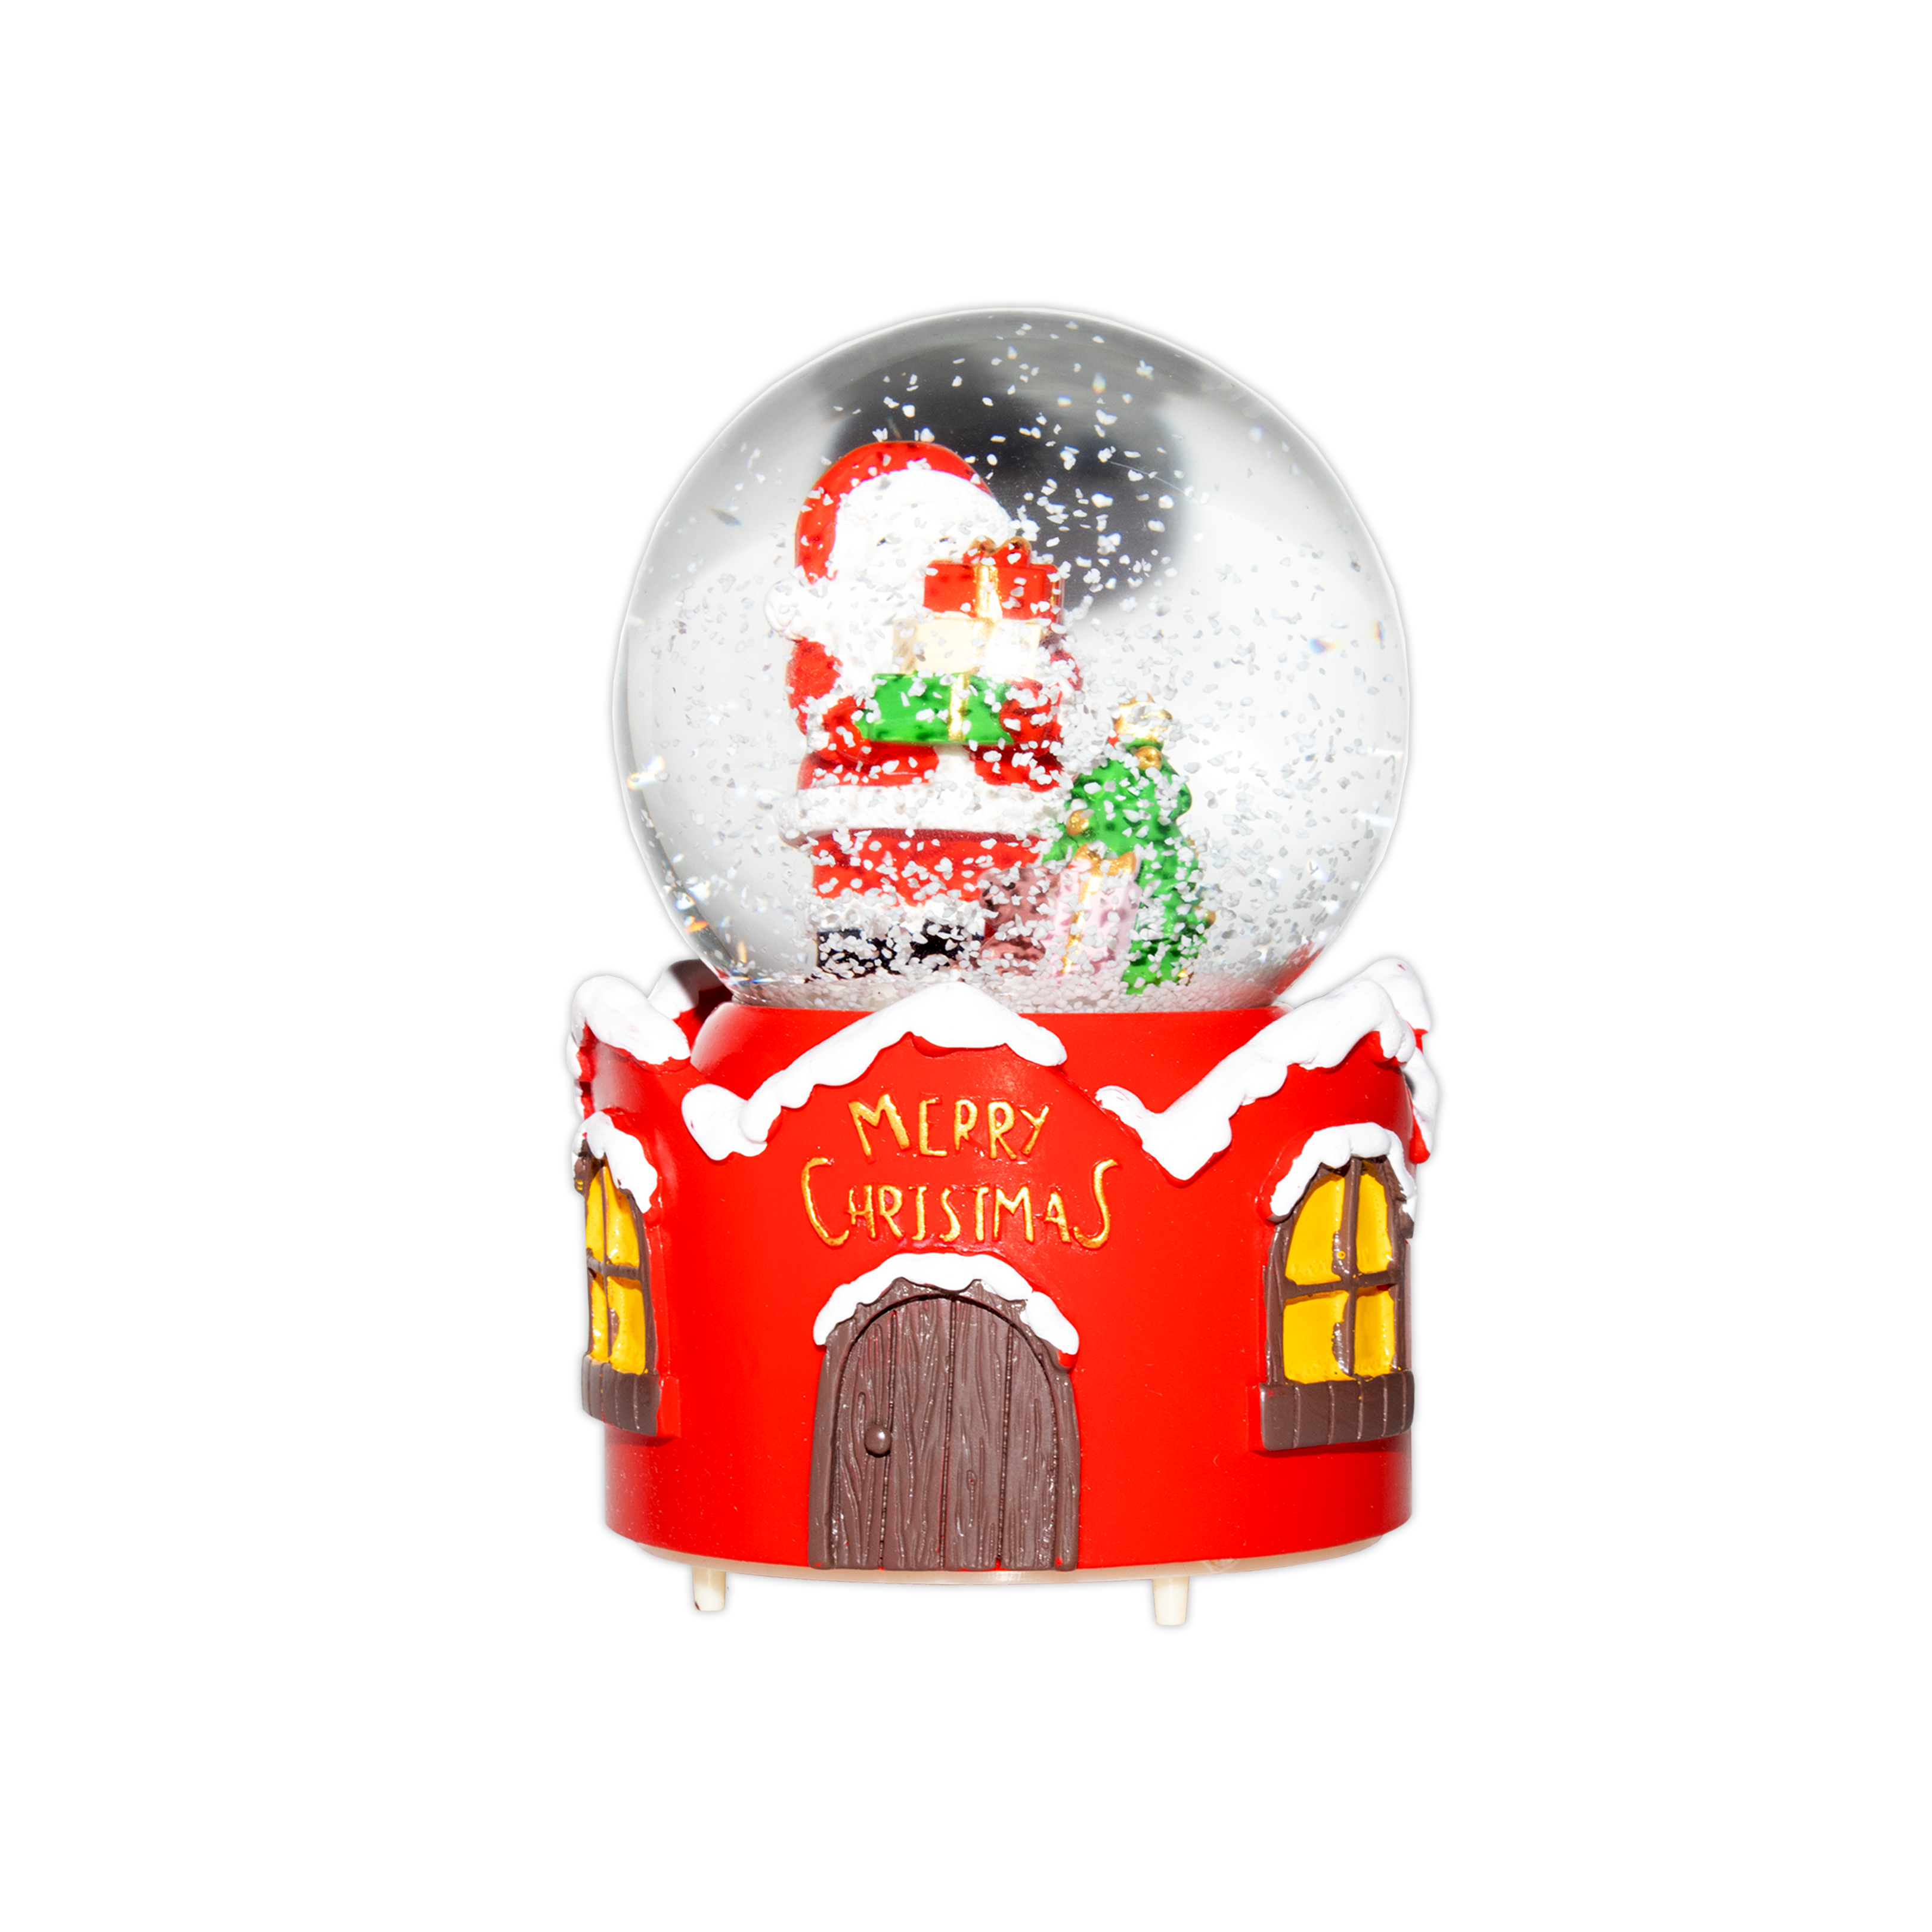 Christmas Musical Snow Globe Santa With Gift Box Teddy And Tree 5inch 1pc Box IB